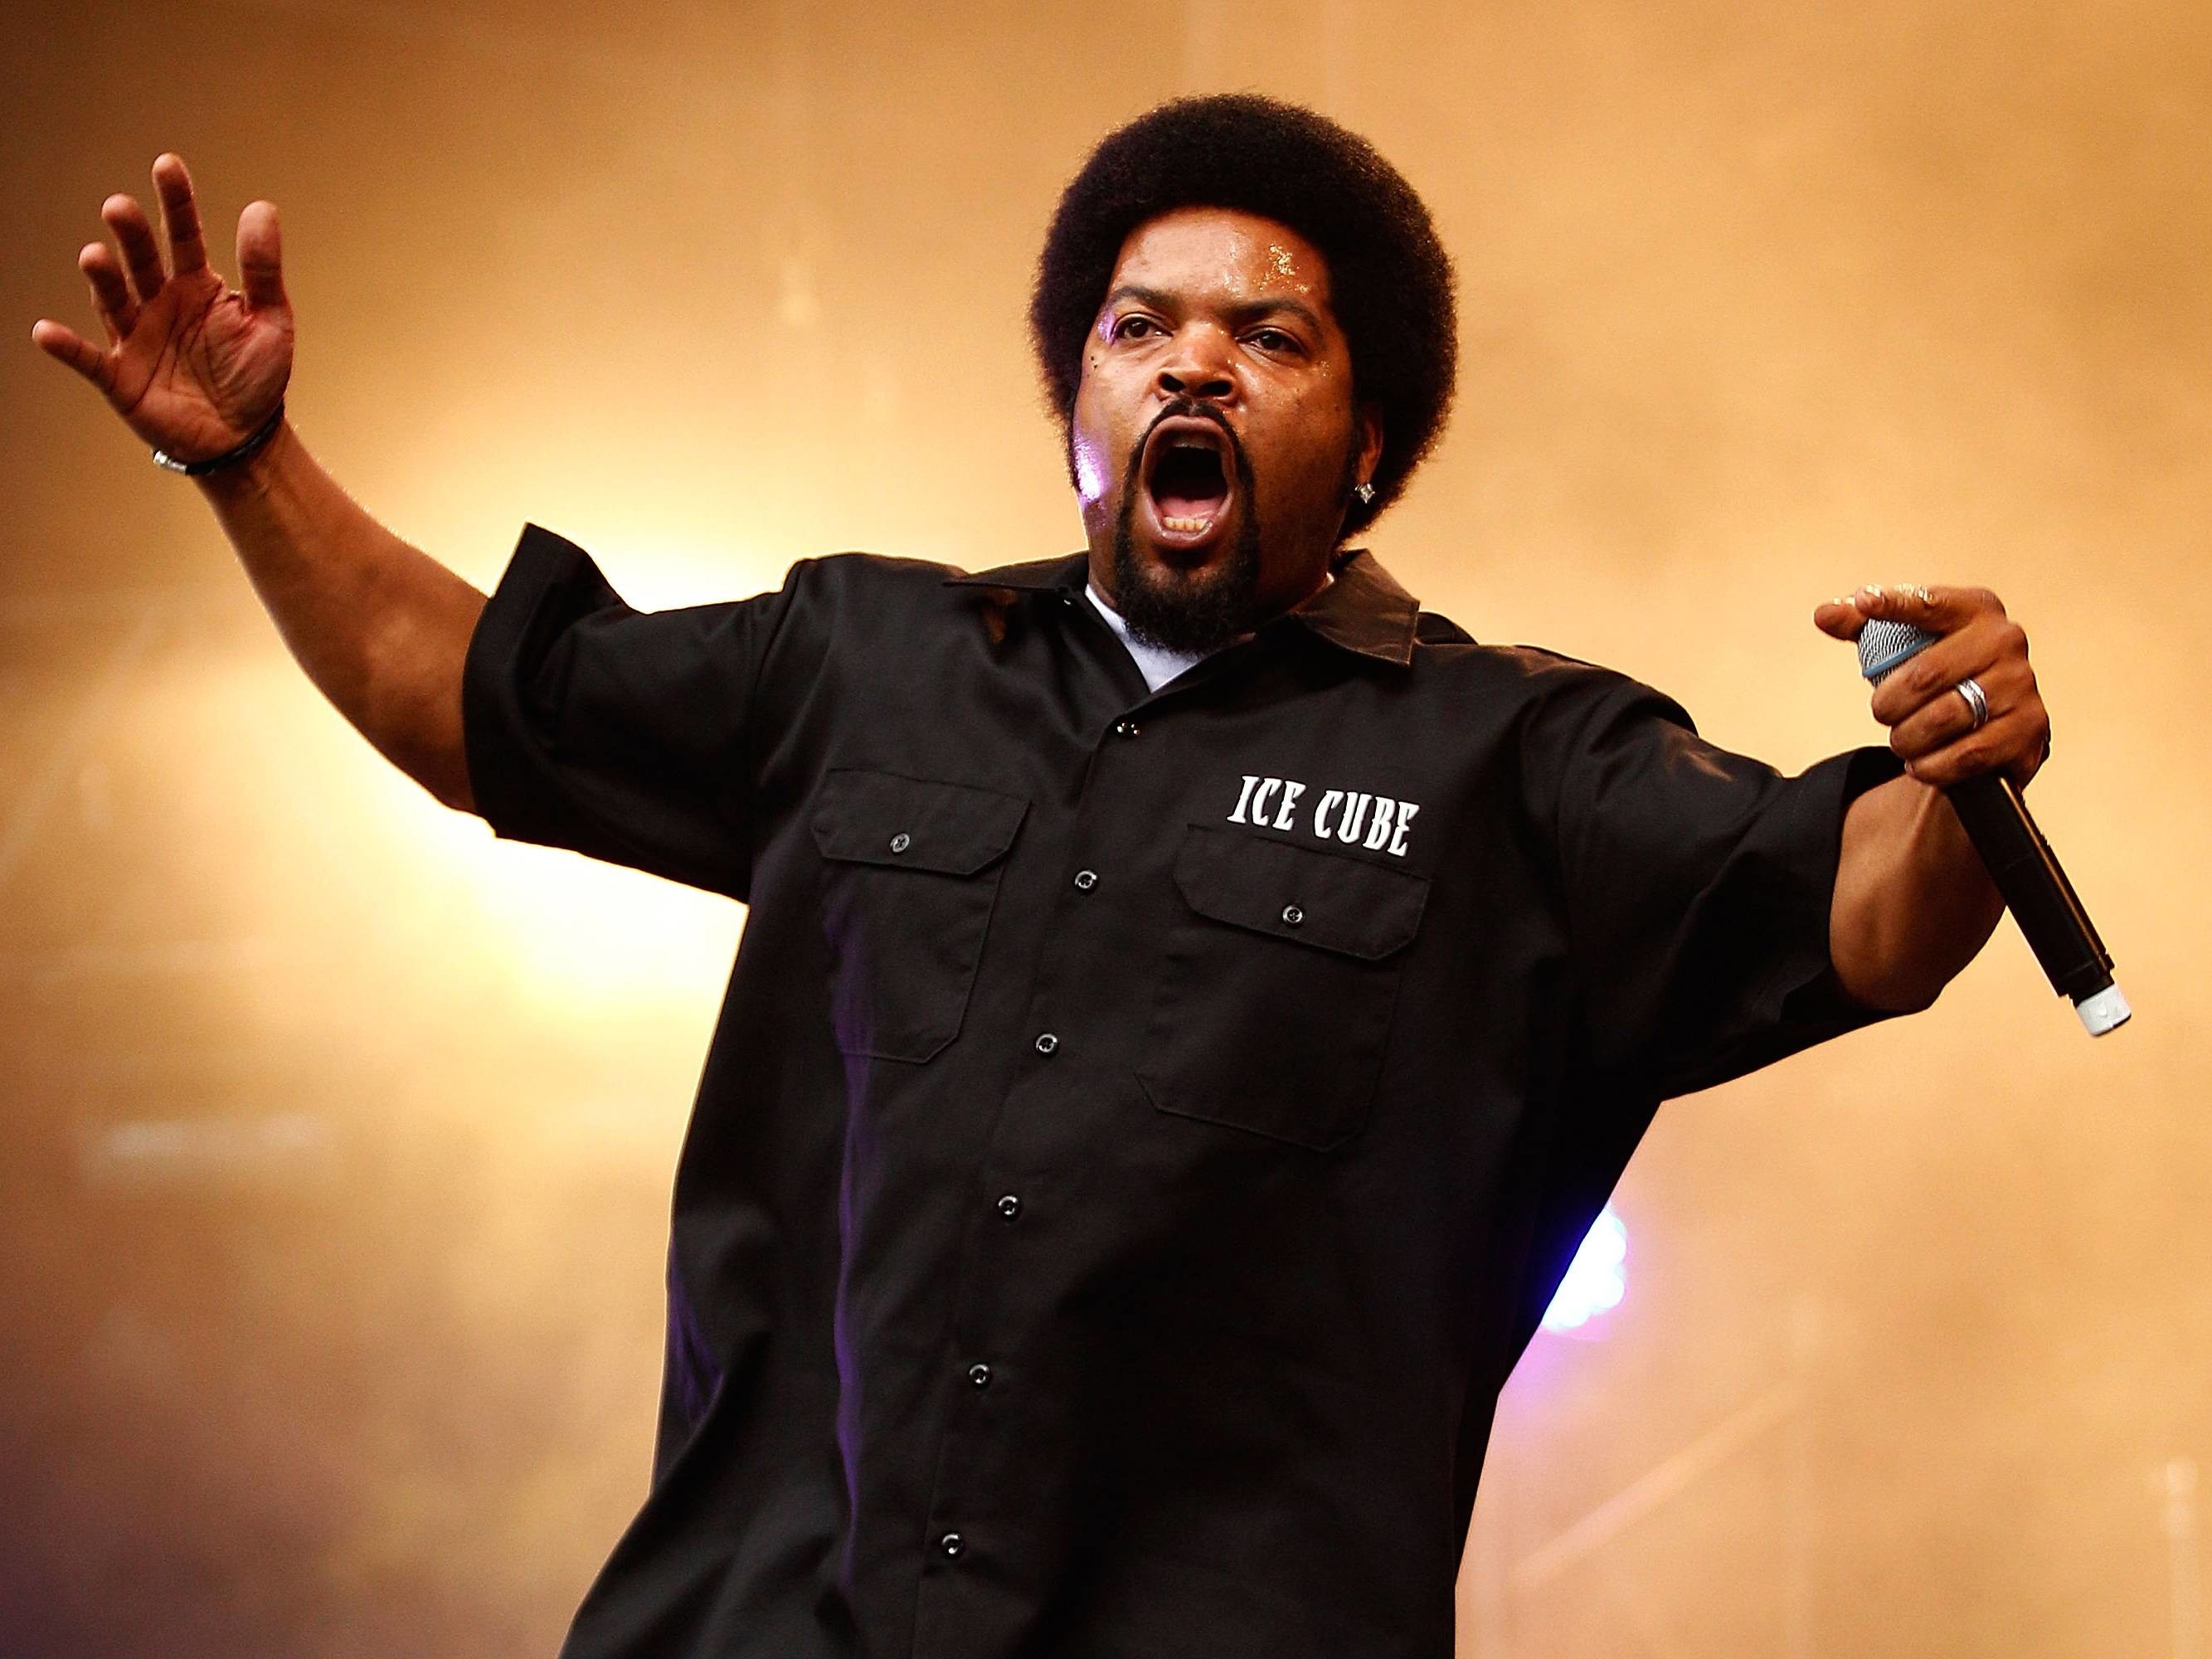 Ic cube. Айс Кьюб. Айс Кьюб (Ice Cube). Ice Cube 2000. Ice Cube фото.